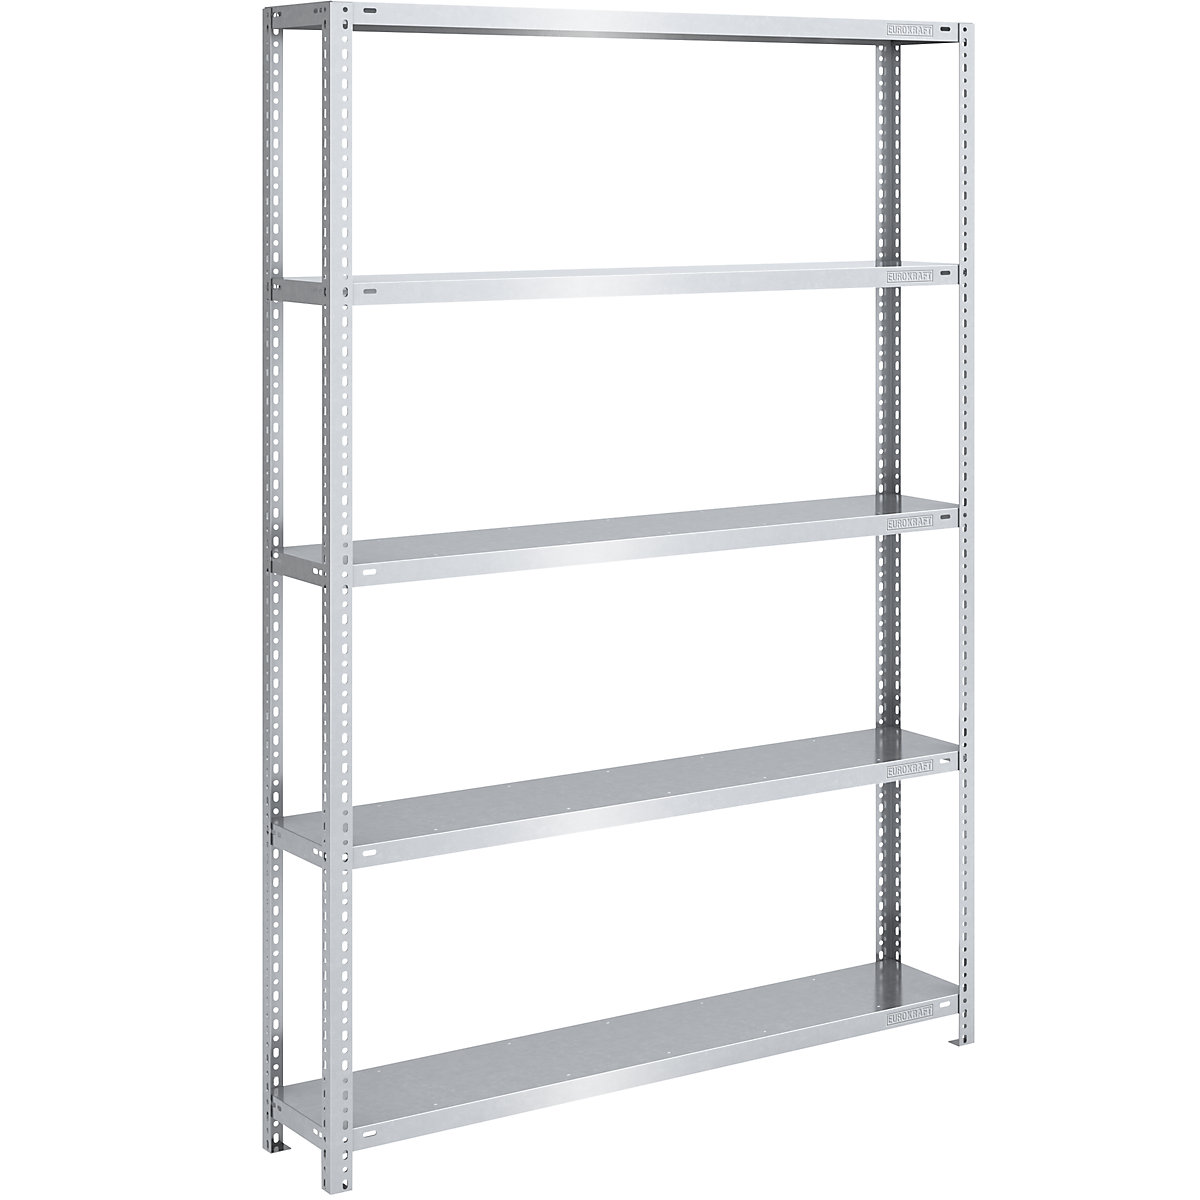 Bolt-together shelf unit, light duty, zinc plated – eurokraft pro, shelf unit height 2000 mm, shelf width 1300 mm, depth 300 mm, standard shelf unit-12